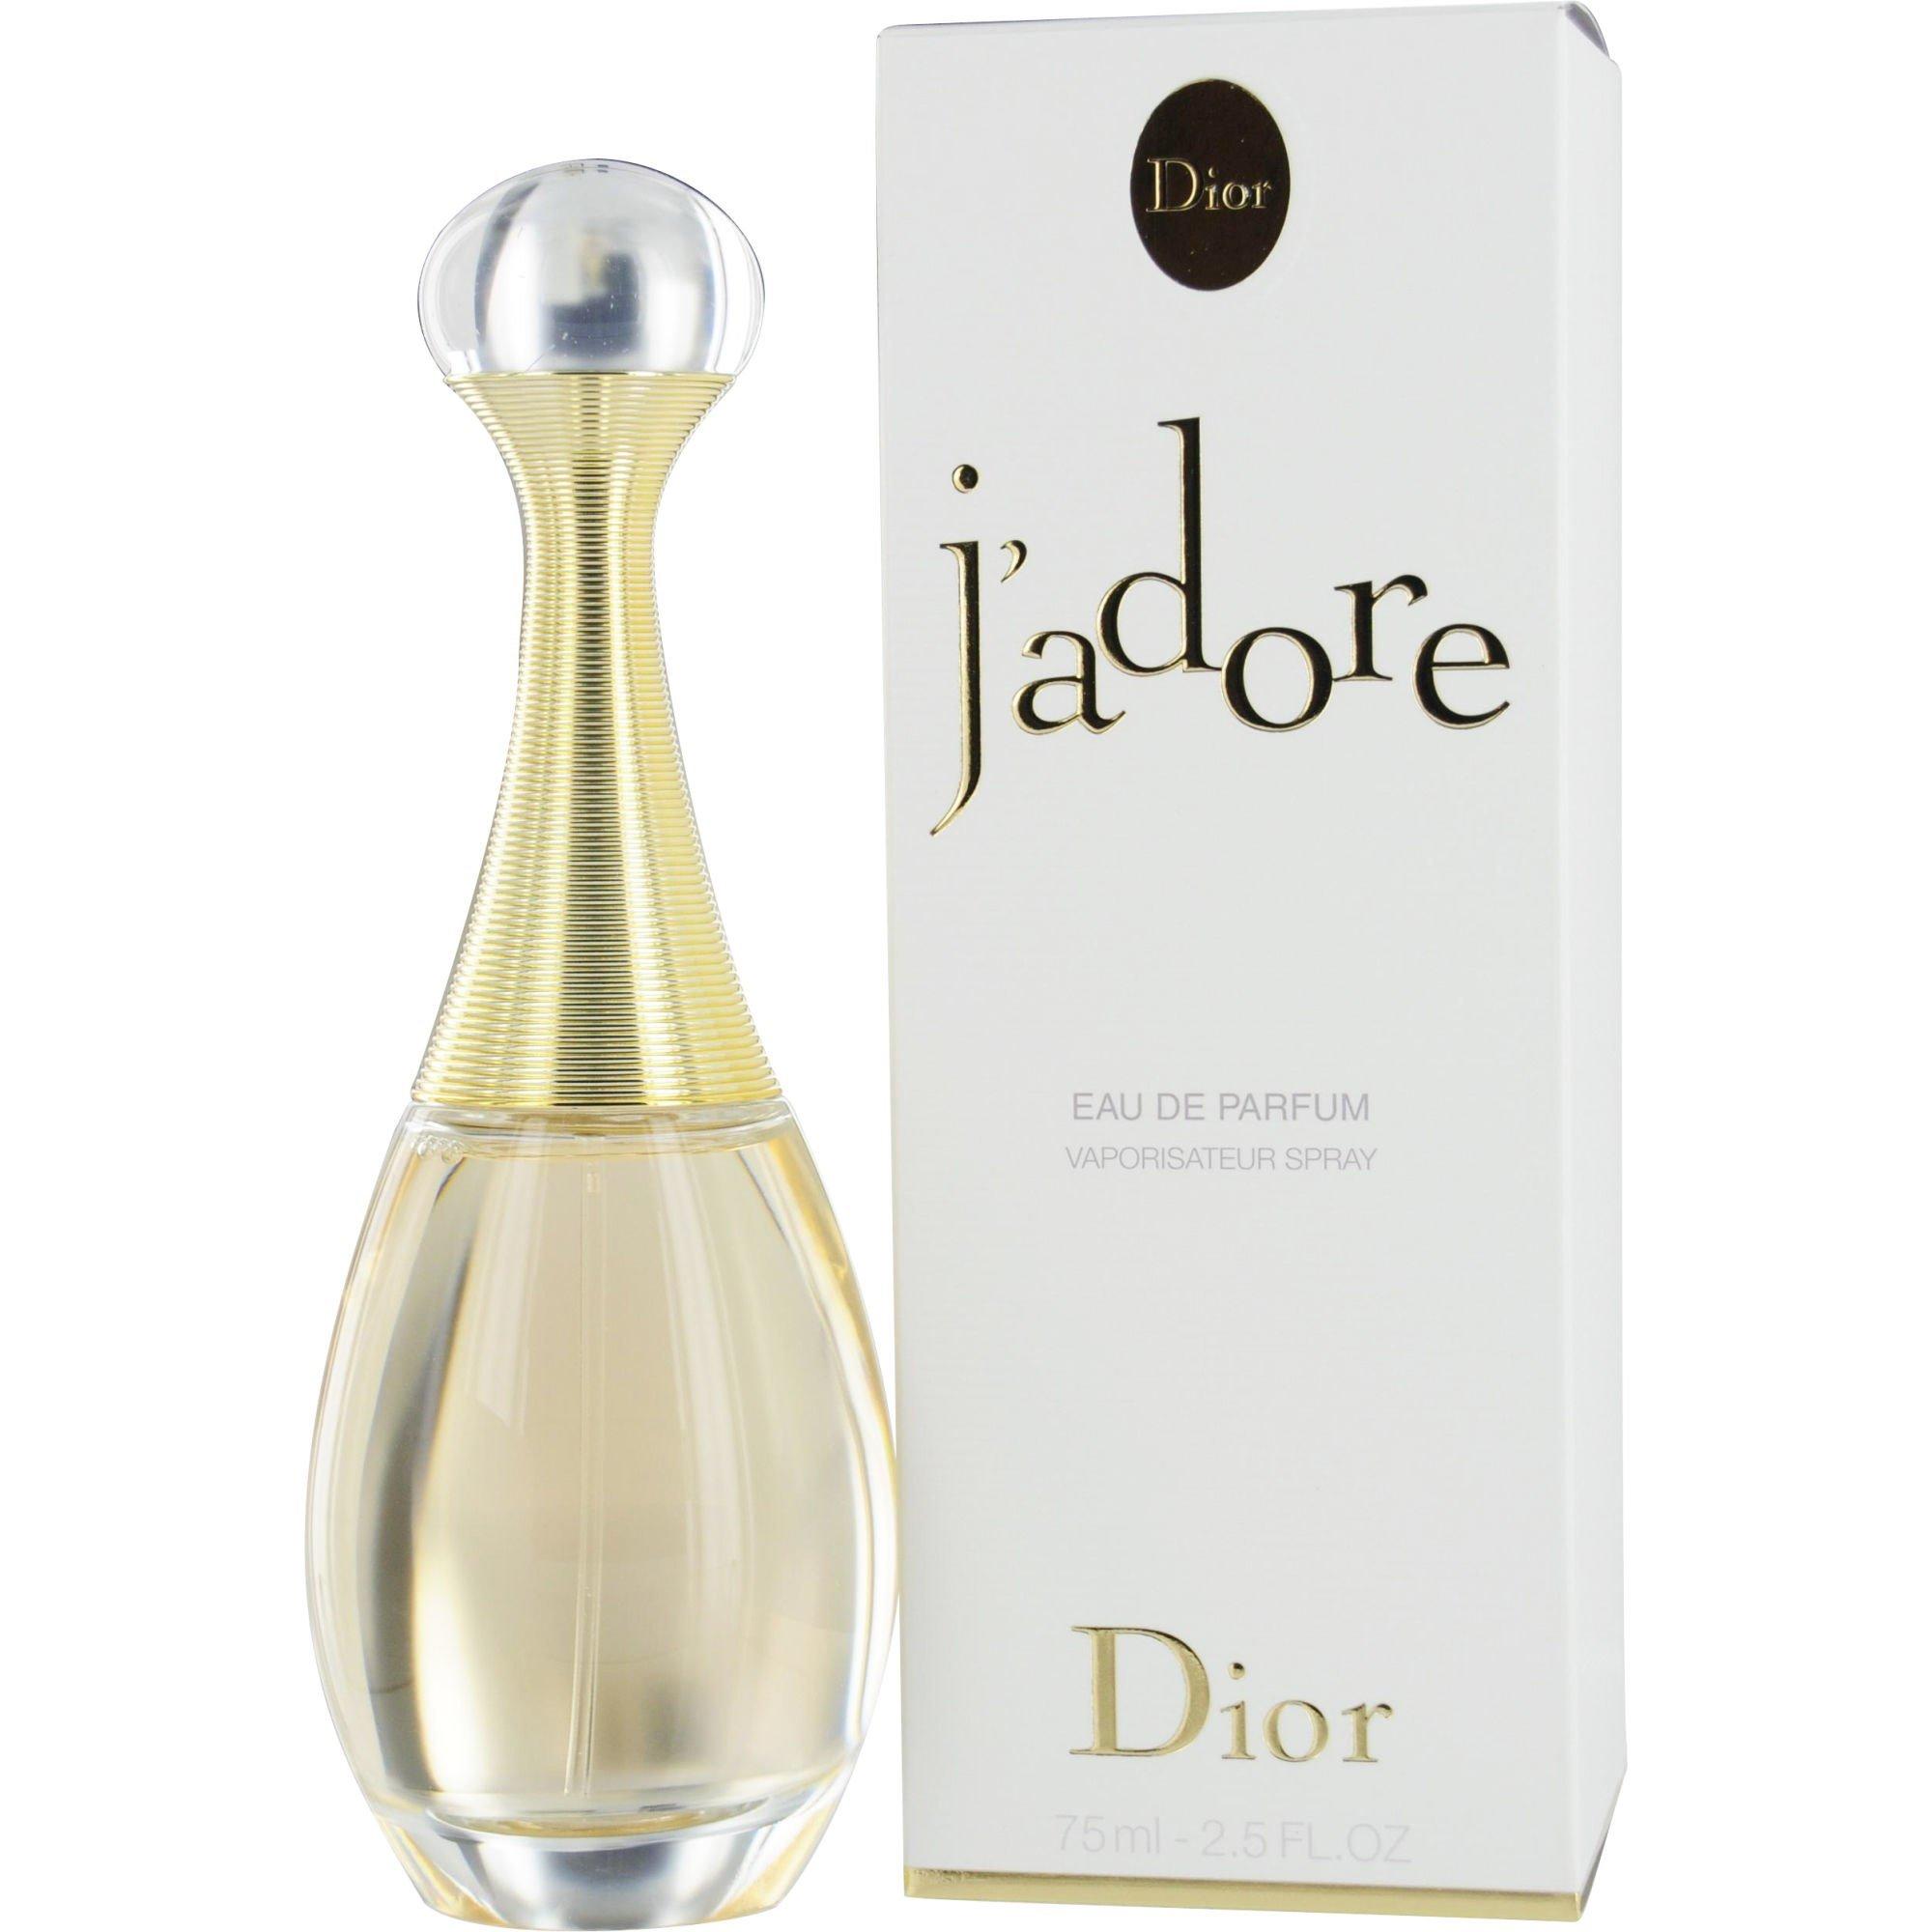 jadore parfum